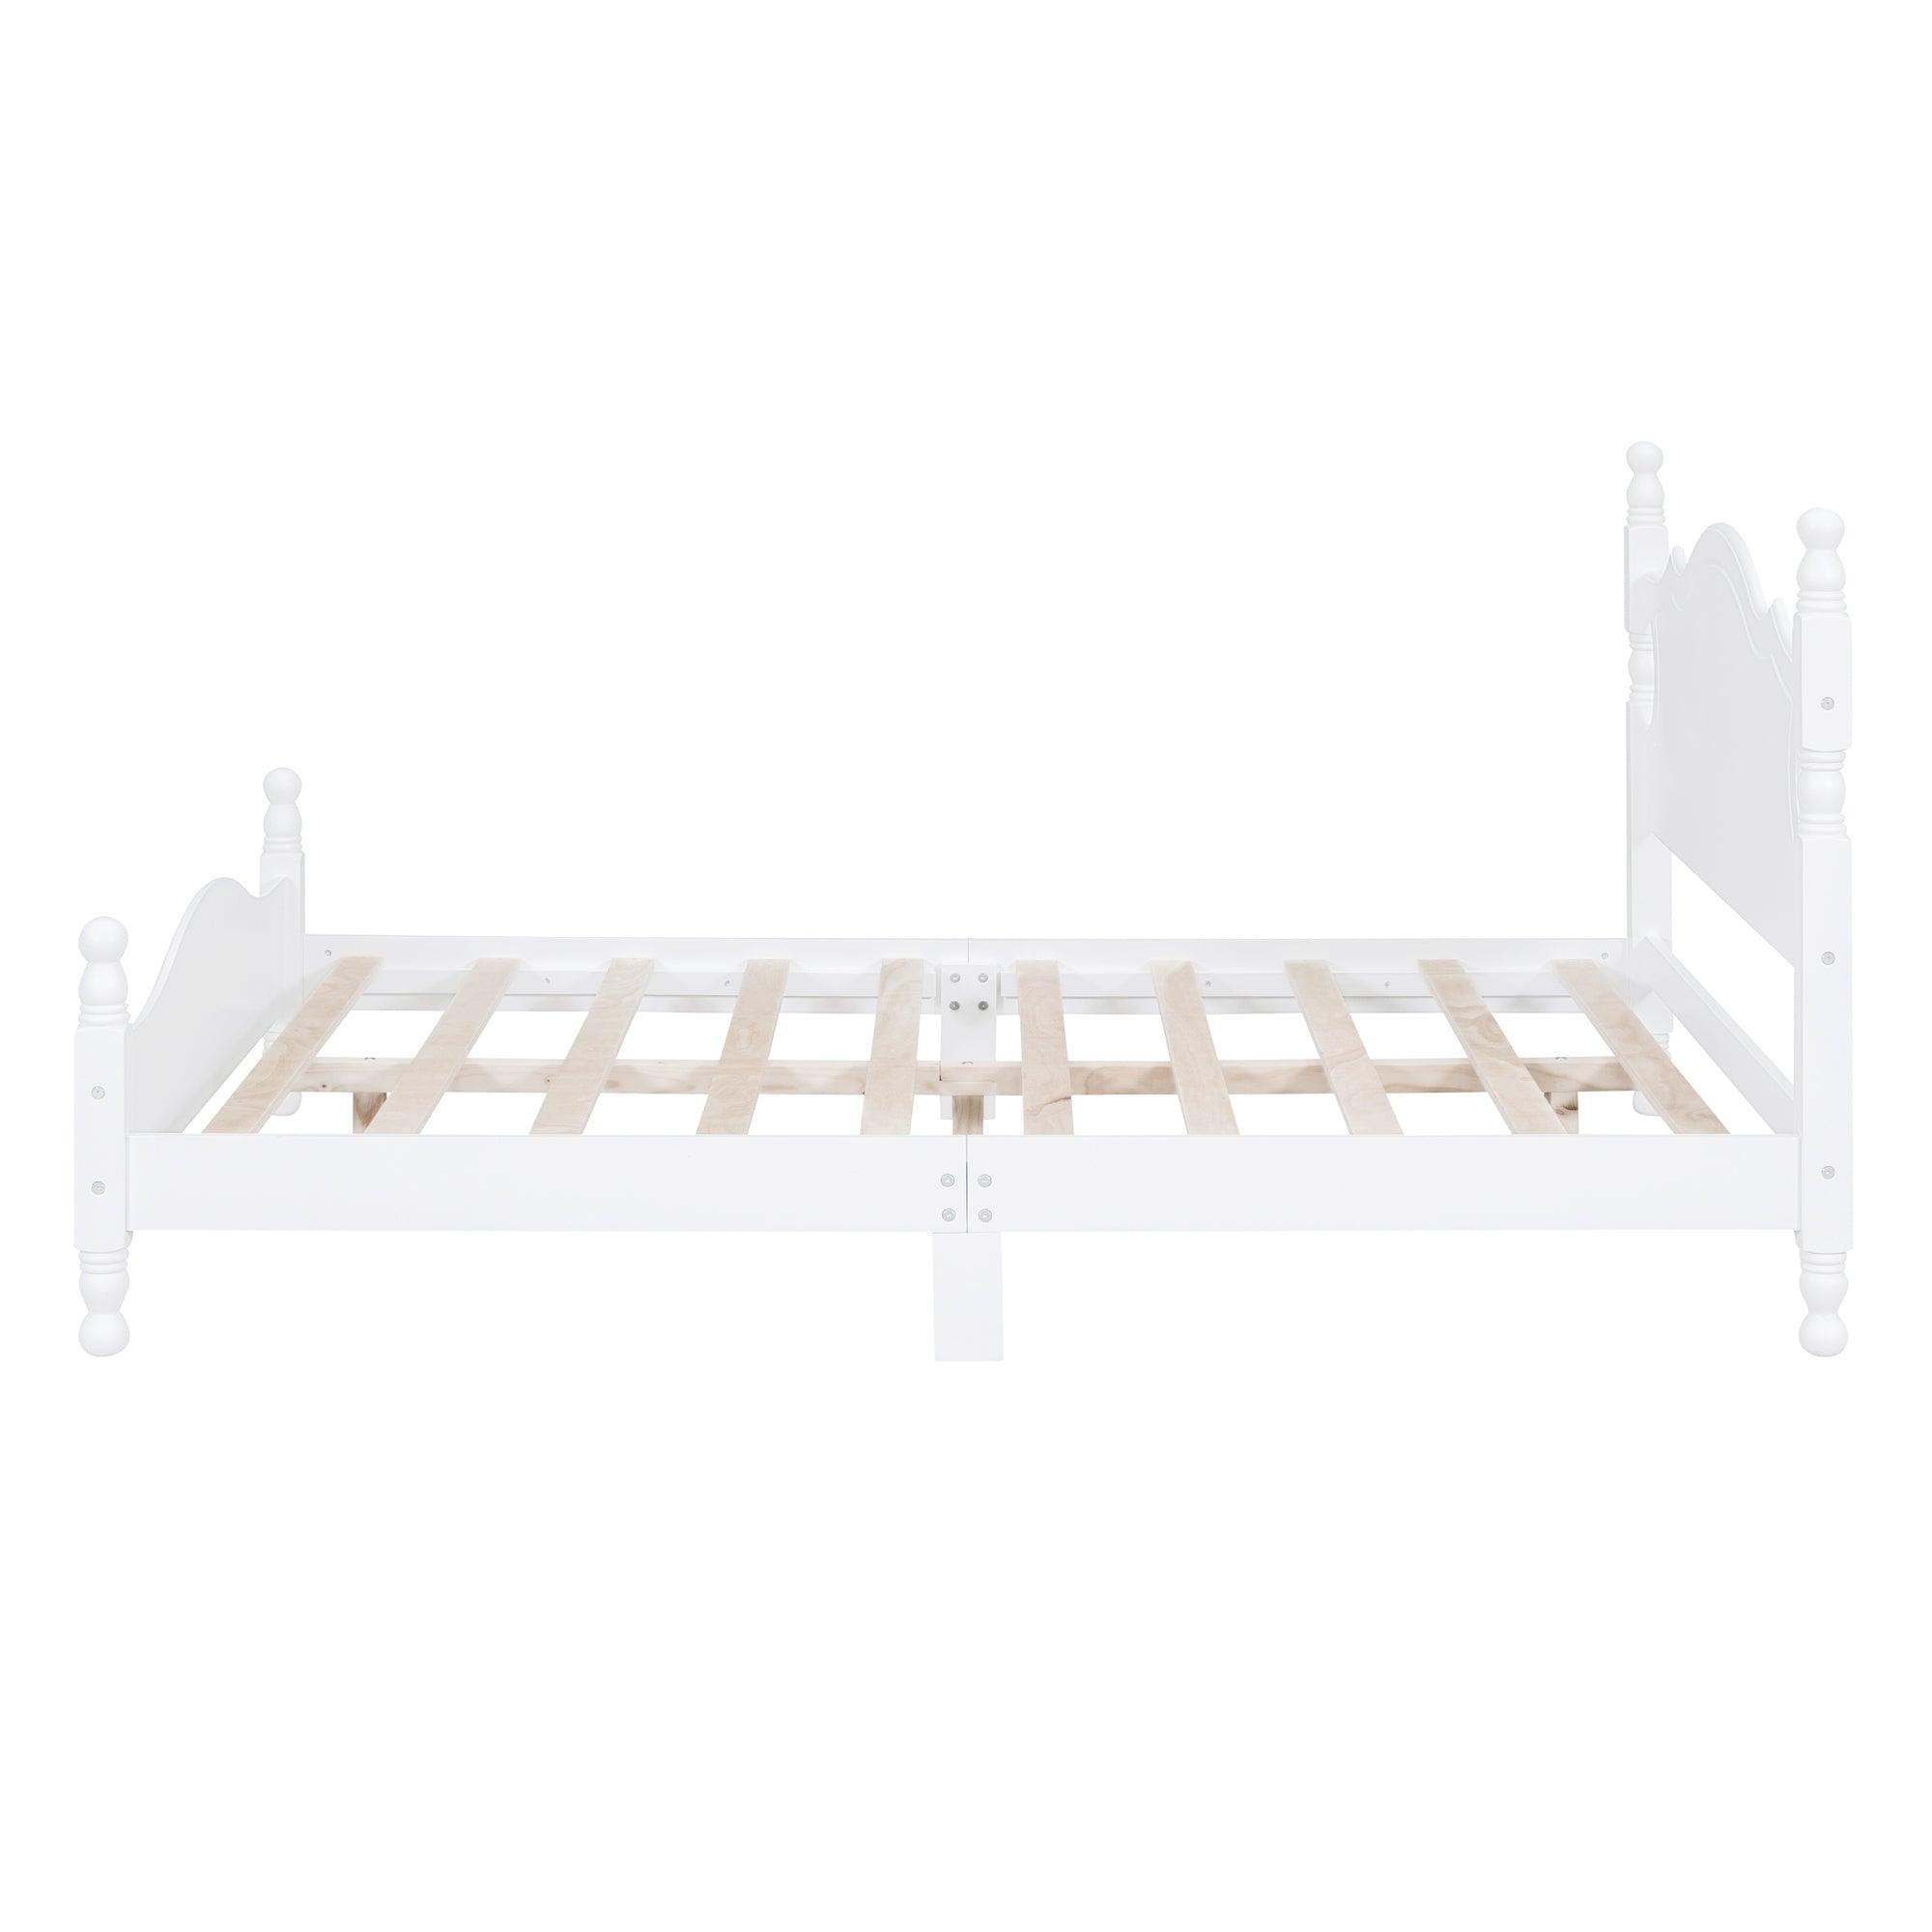 CIFYUN Full Size Retro Style Wood Platform Bed Frame, White LamCham